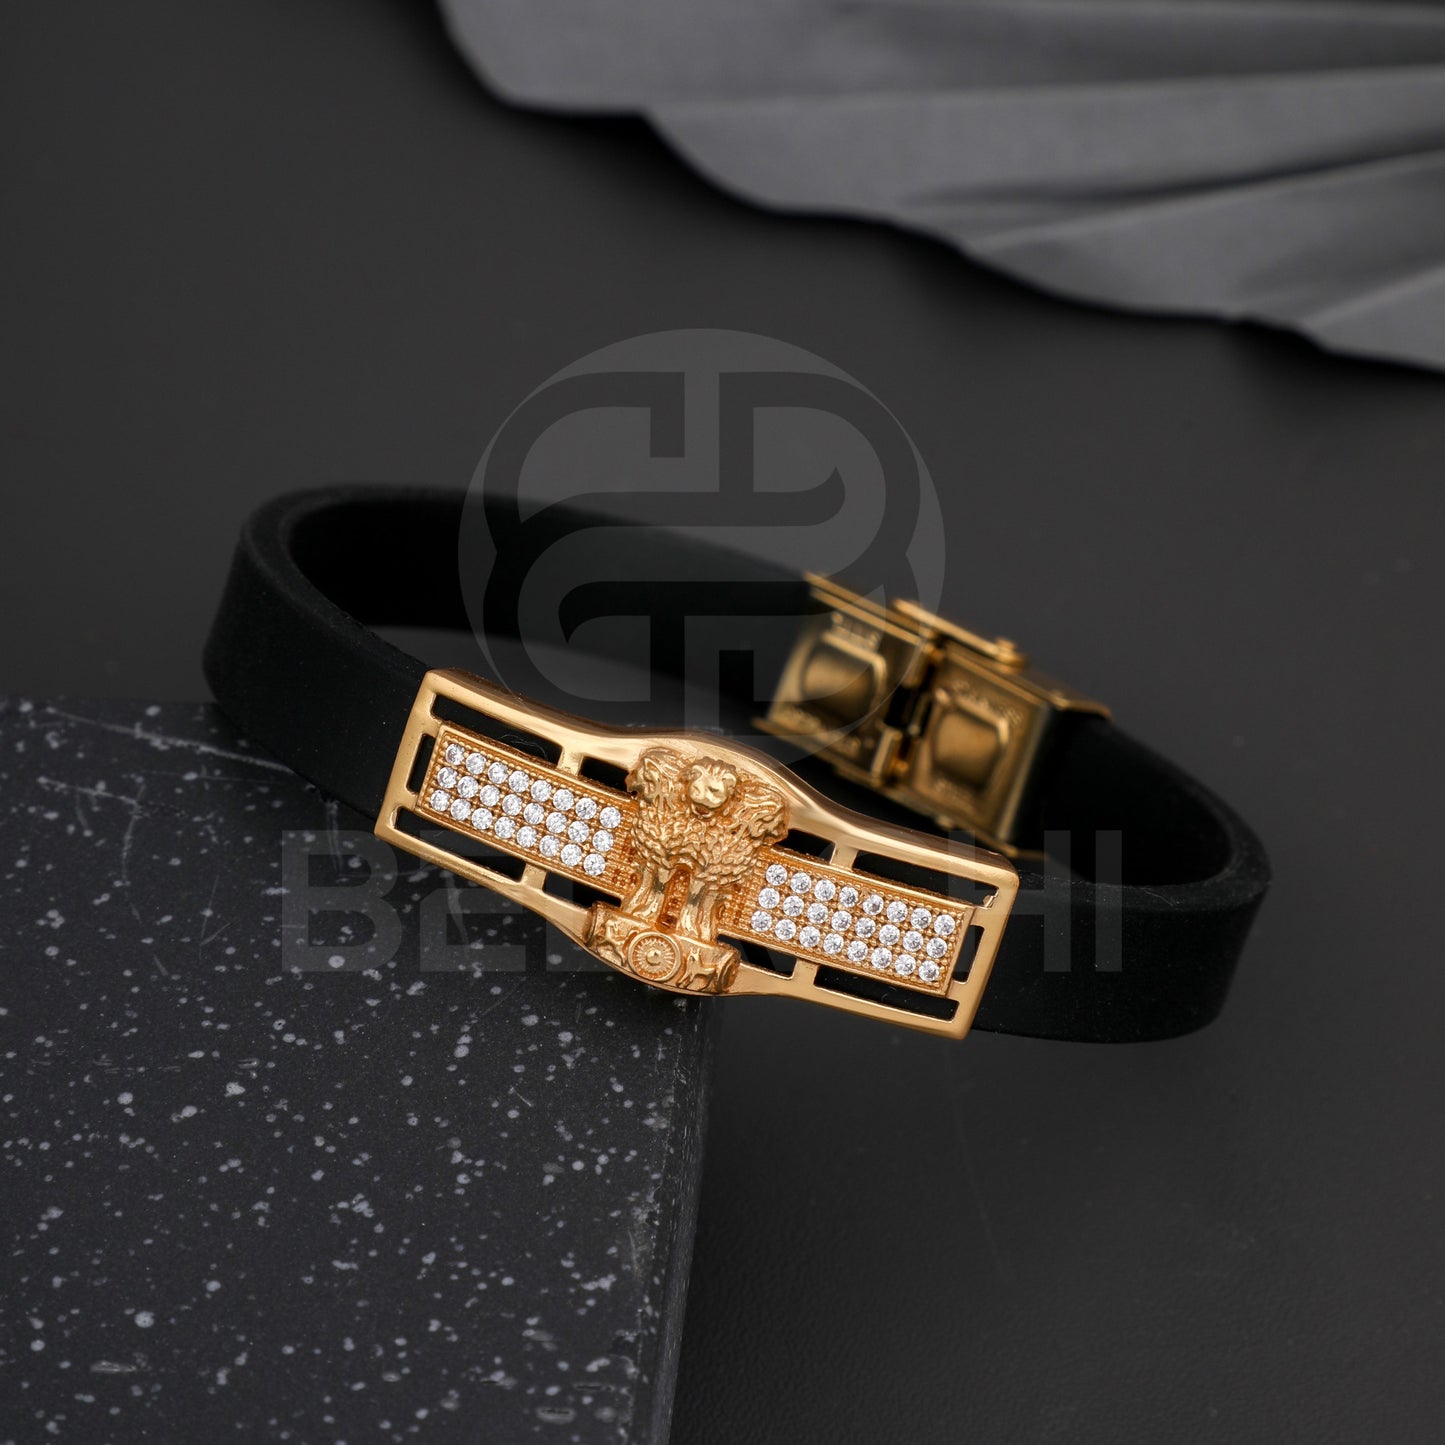 GOLD PLATED ASHOKA WITH DIAMOND IN BLACK SILICONE BRACELET